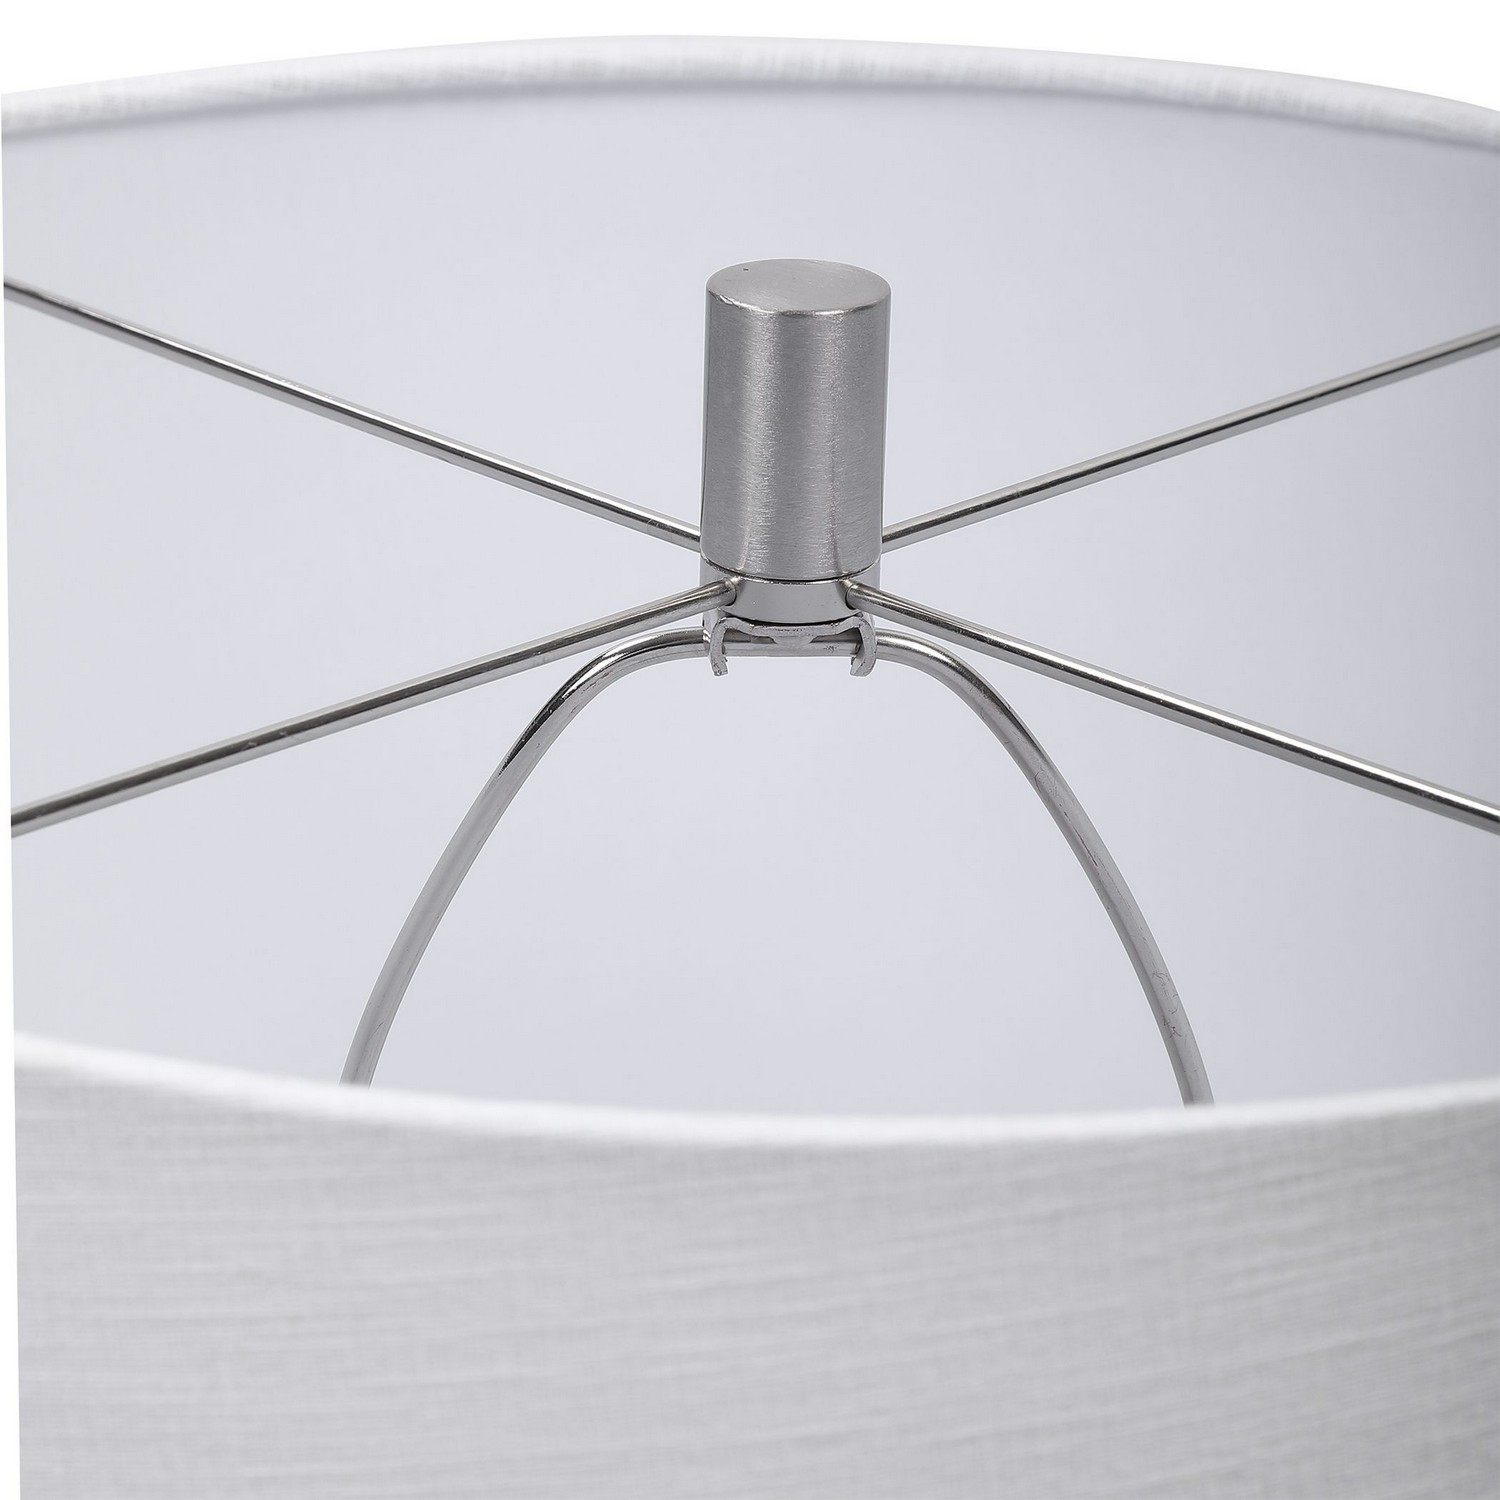 Uttermost Guerina Table Lamp - Gray